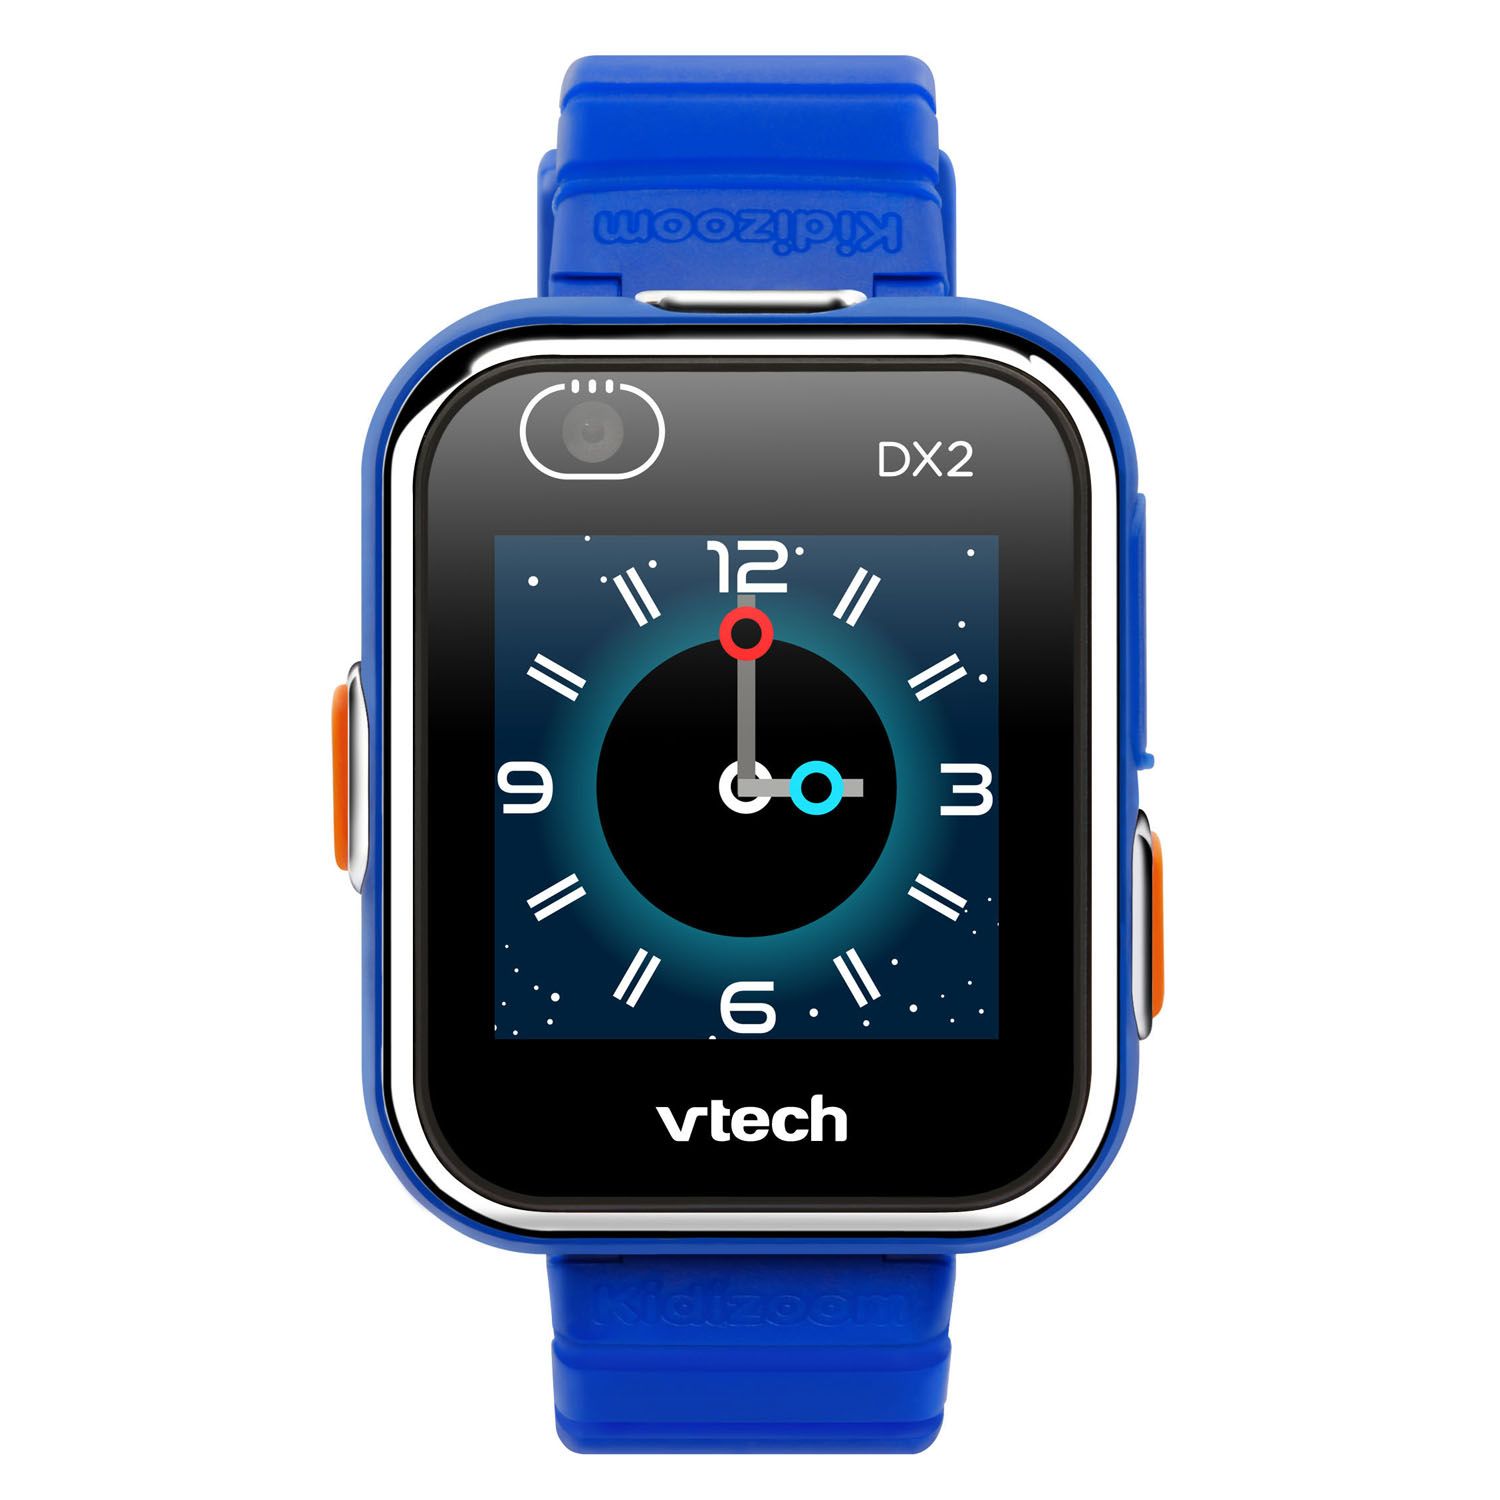 vtech kidizoom smartwatch dx2 change language